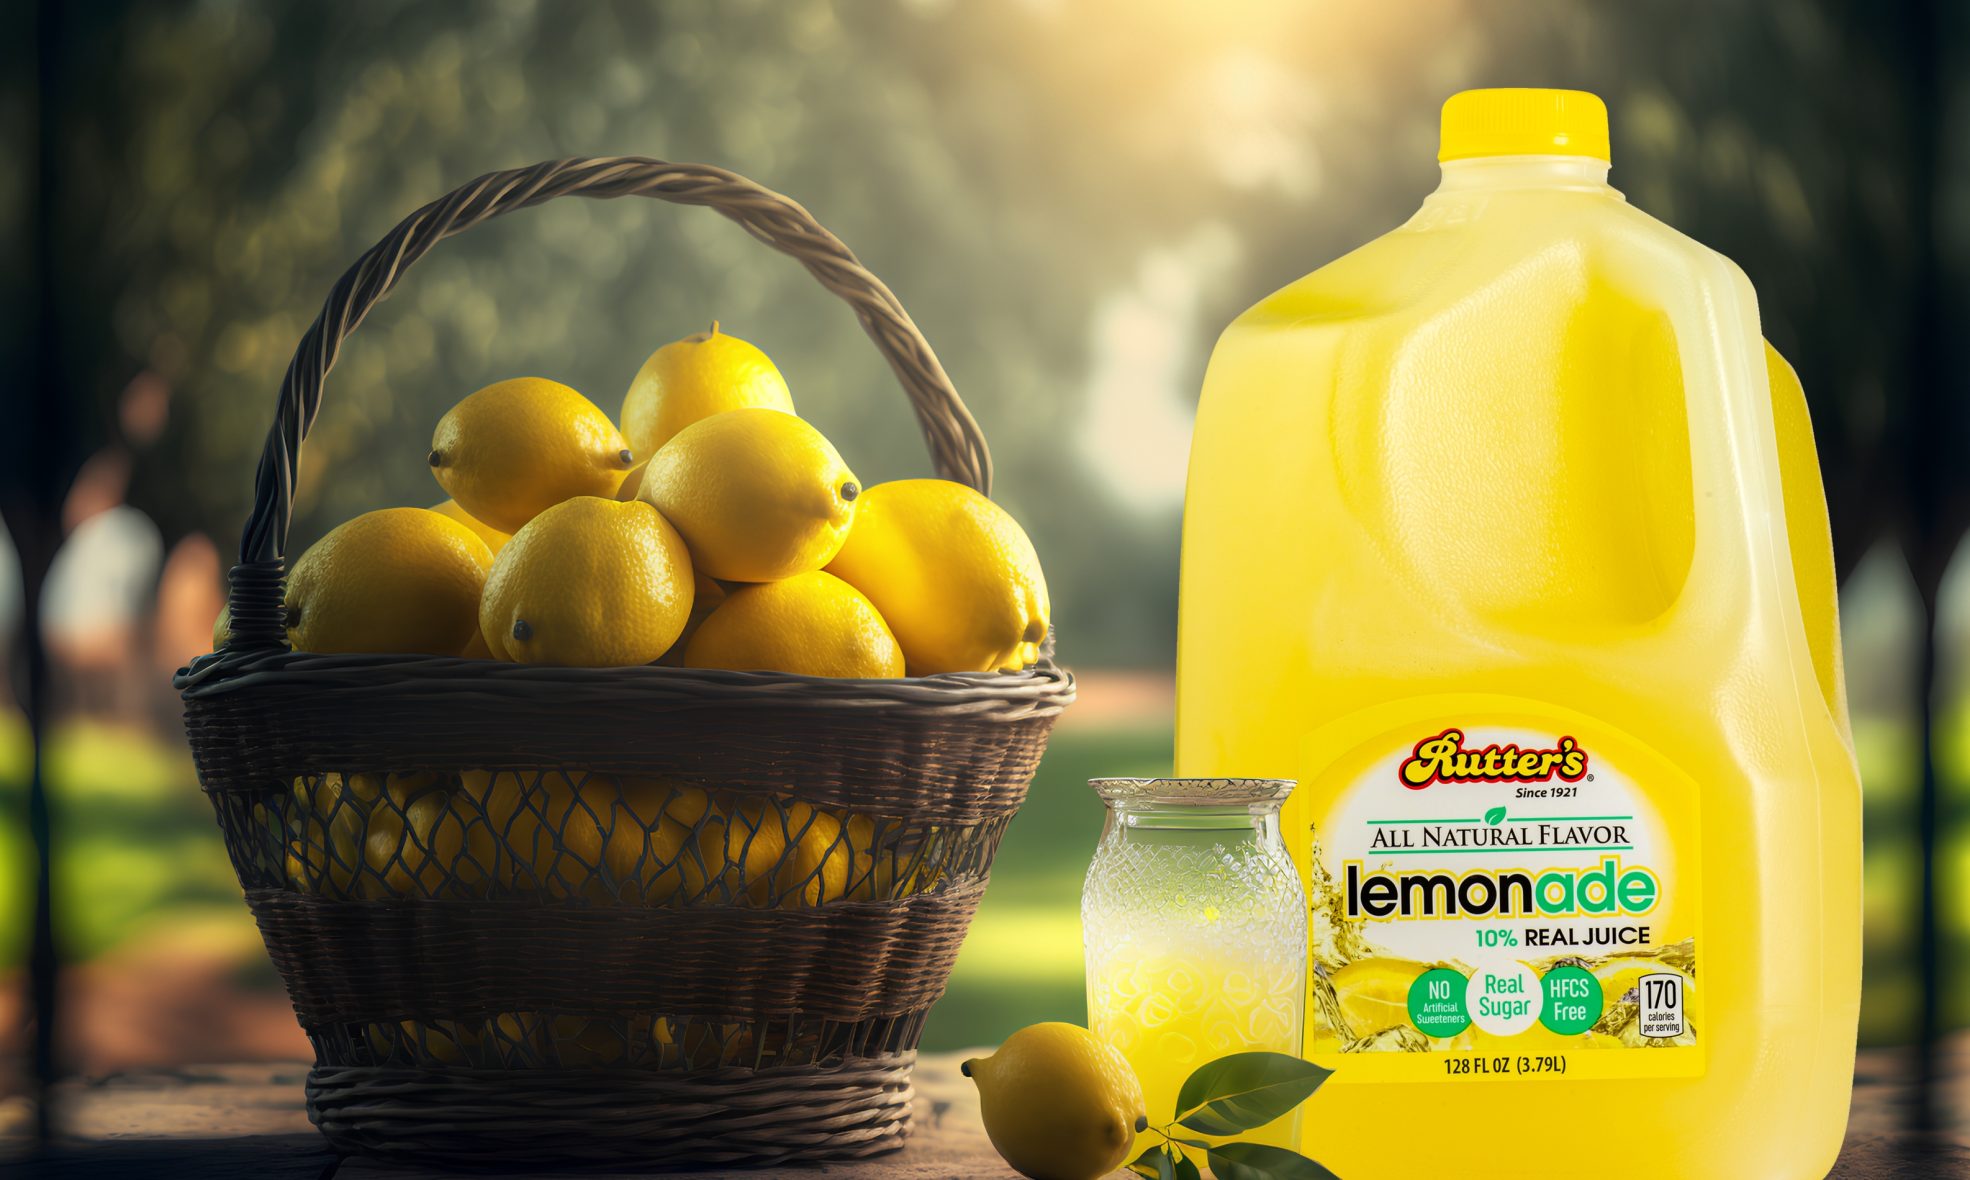 All Natural Flavor Lemonade